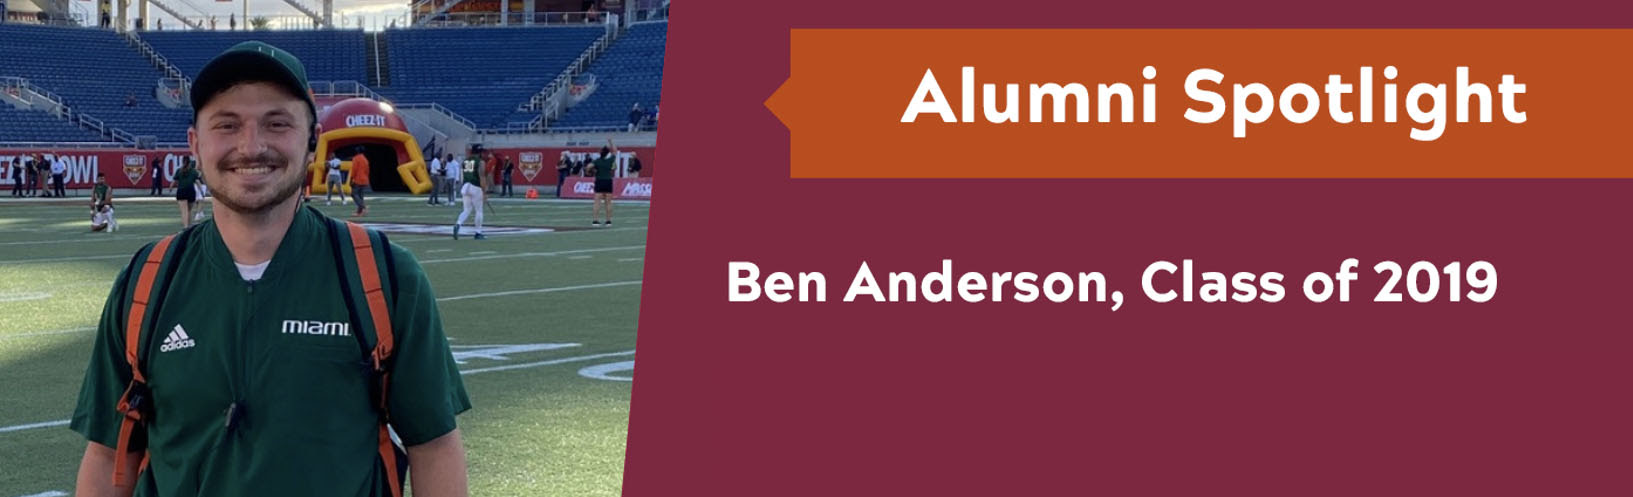 Ben Anderson - Class of 2019